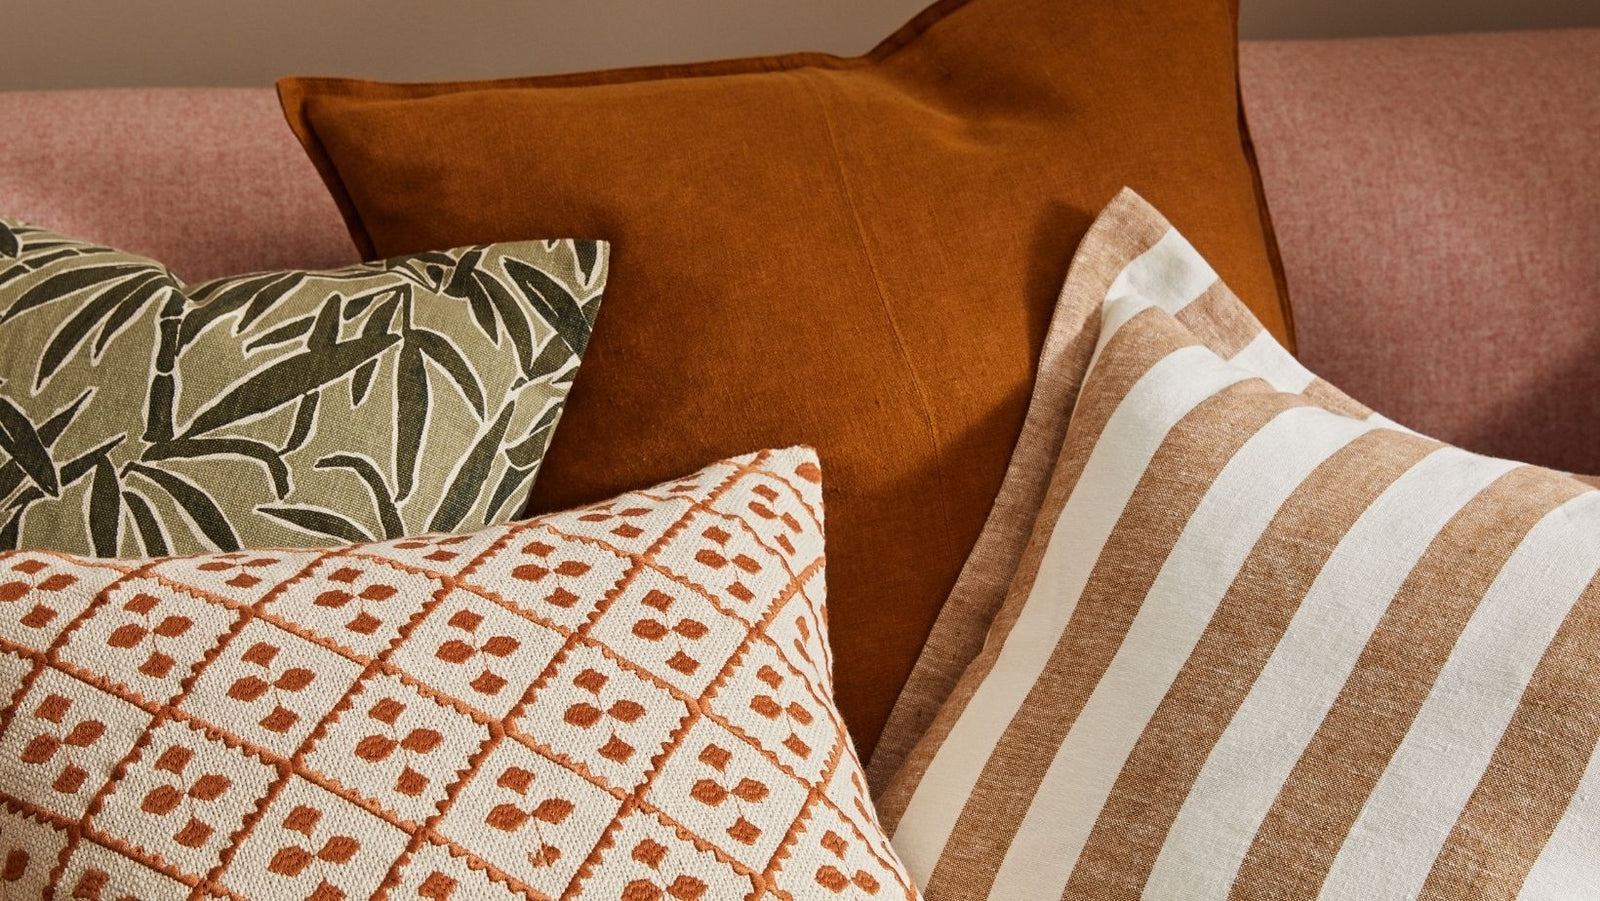 Choosing a winning cushion colour combination